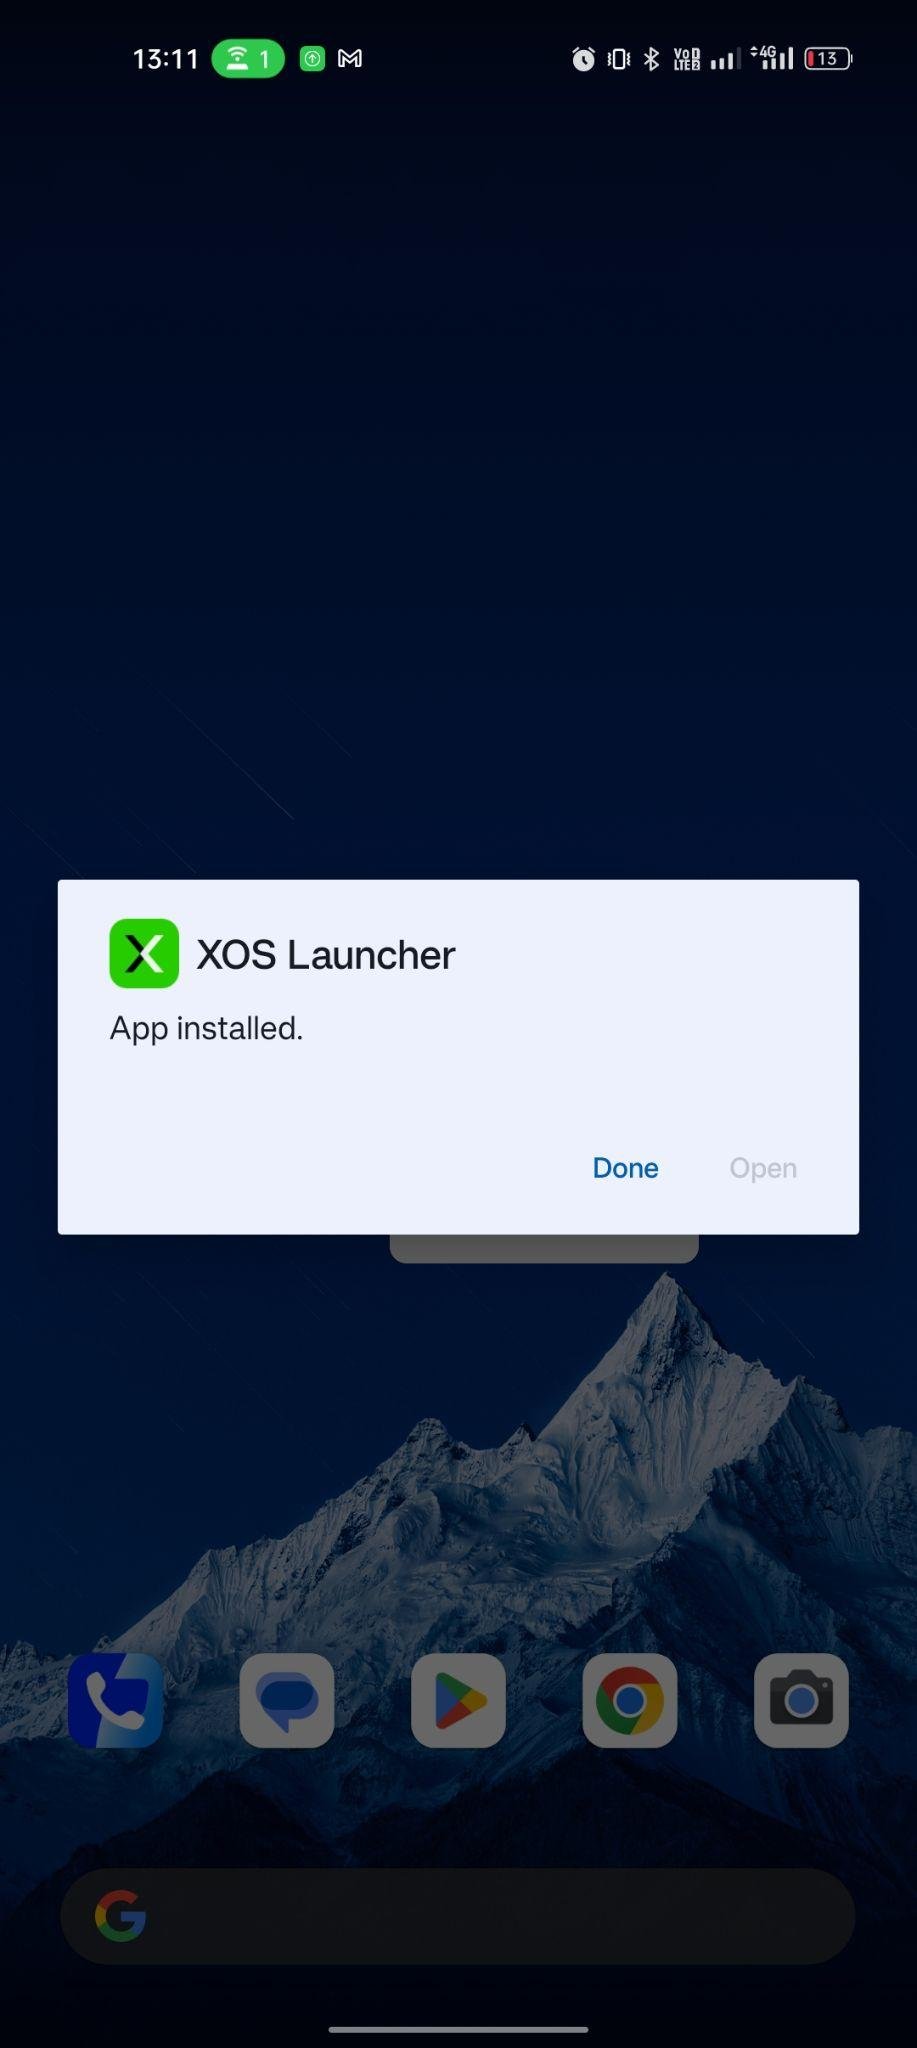 XOS Launcher apk installed